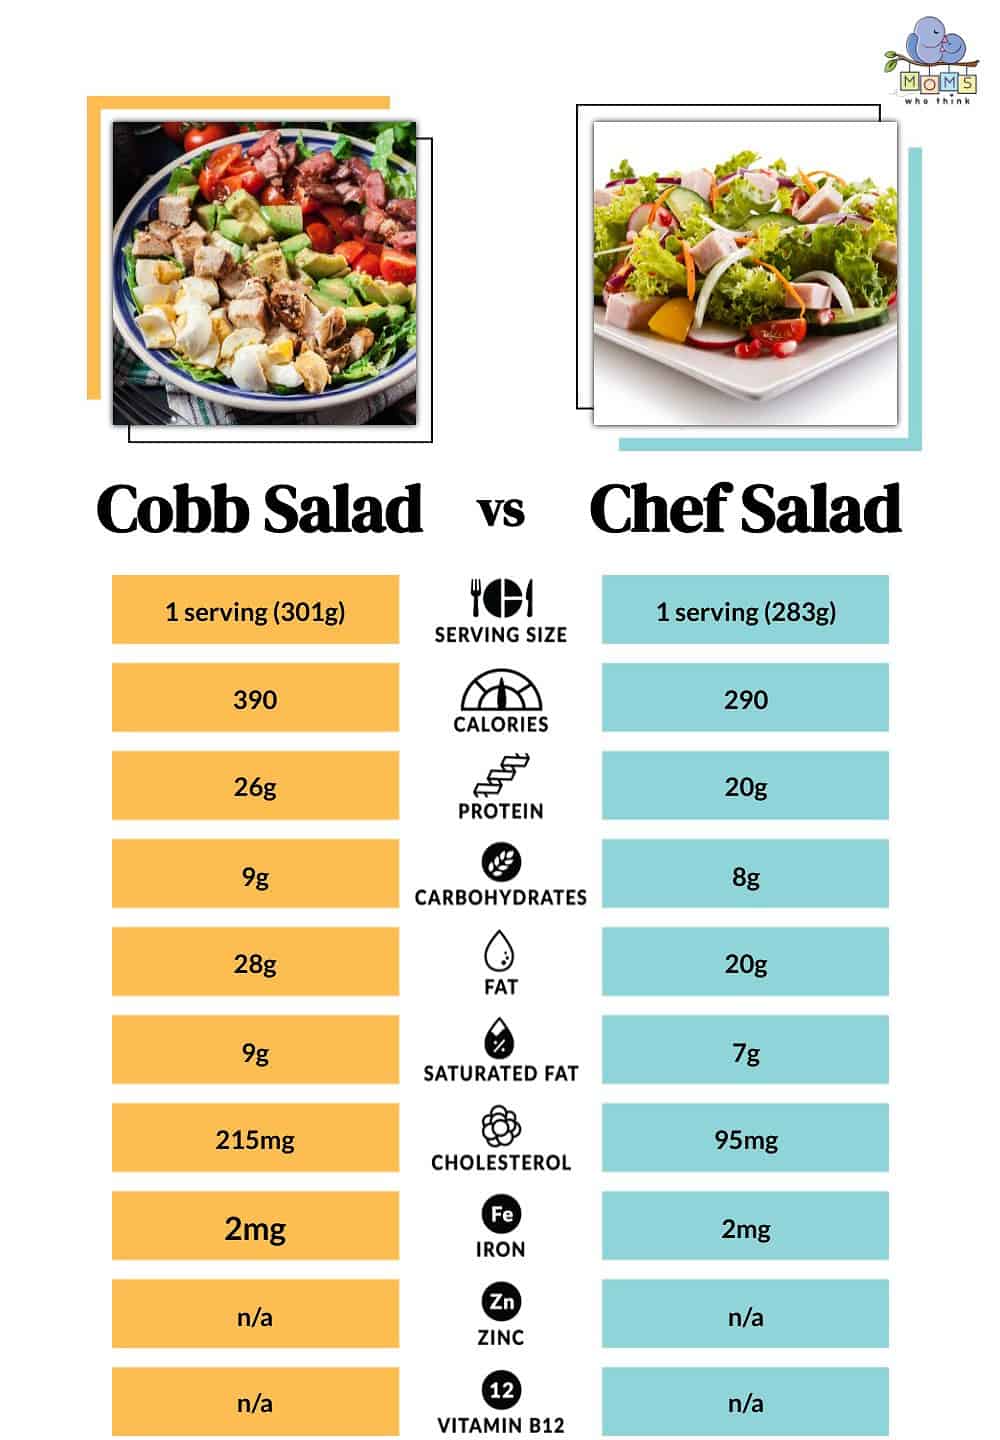 Cobb Salad vs Chef Salad Nutritional Facts